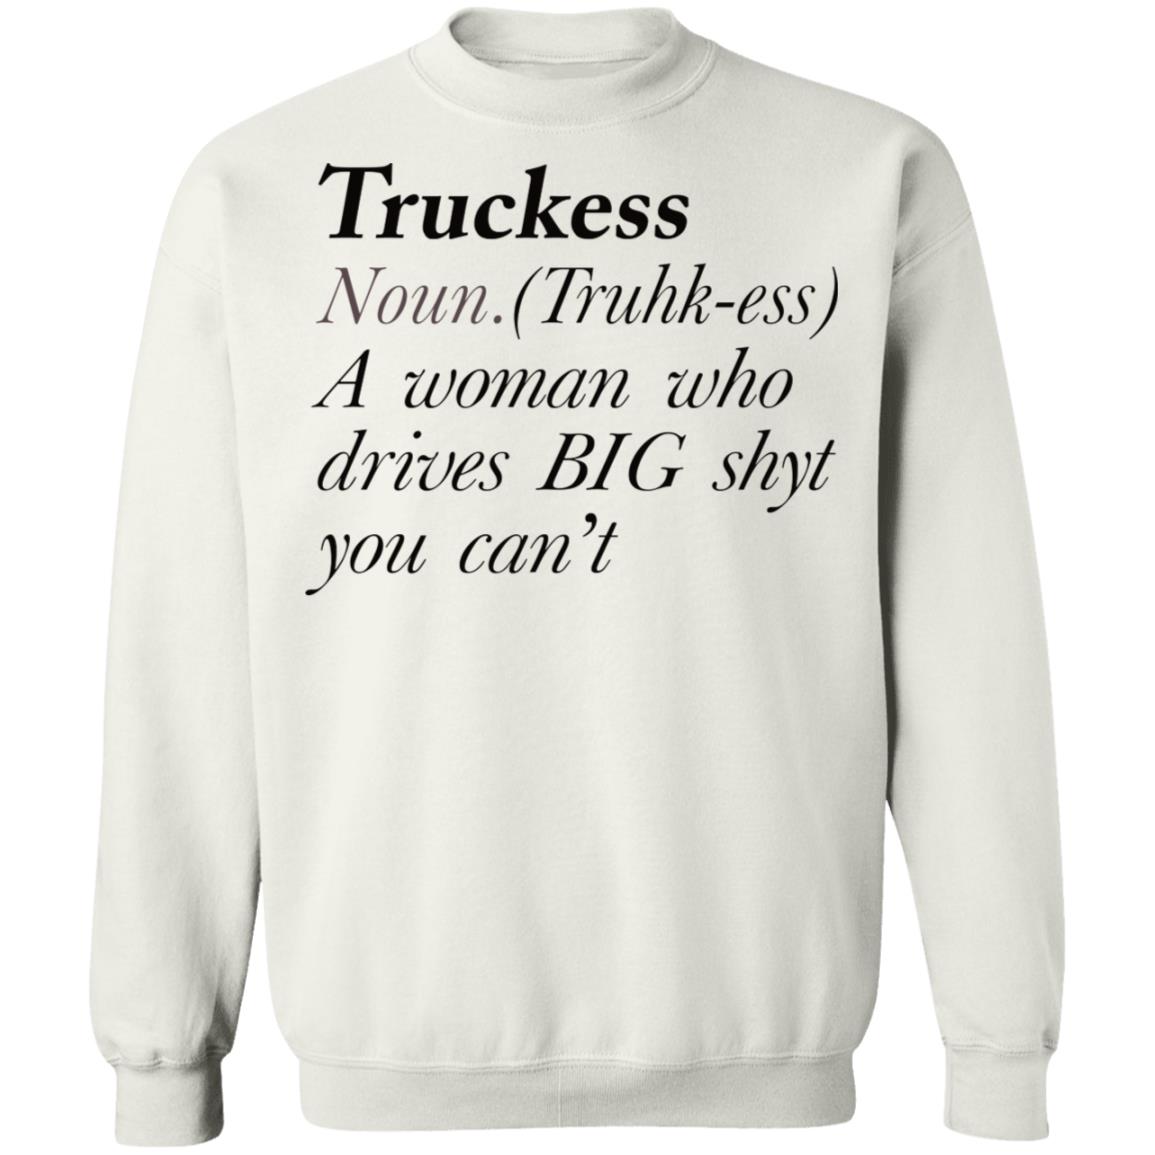 Truckers Noun A Woman Who Drives Big Shyt You Can’t Shirt 2